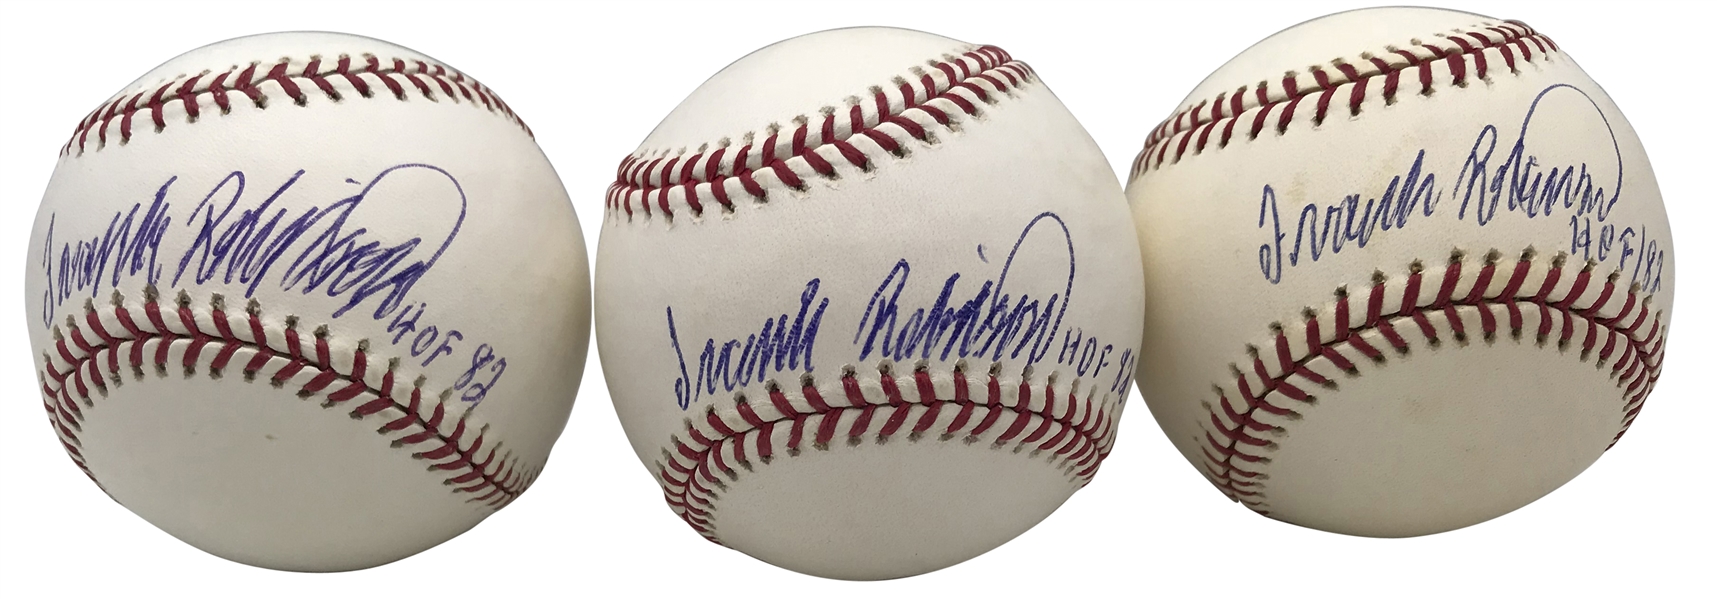 Frank Robinson Lot of Three (3) Signed OML Baseballs w/ HOF 82 Inscription! (Steiner & PSA/DNA)